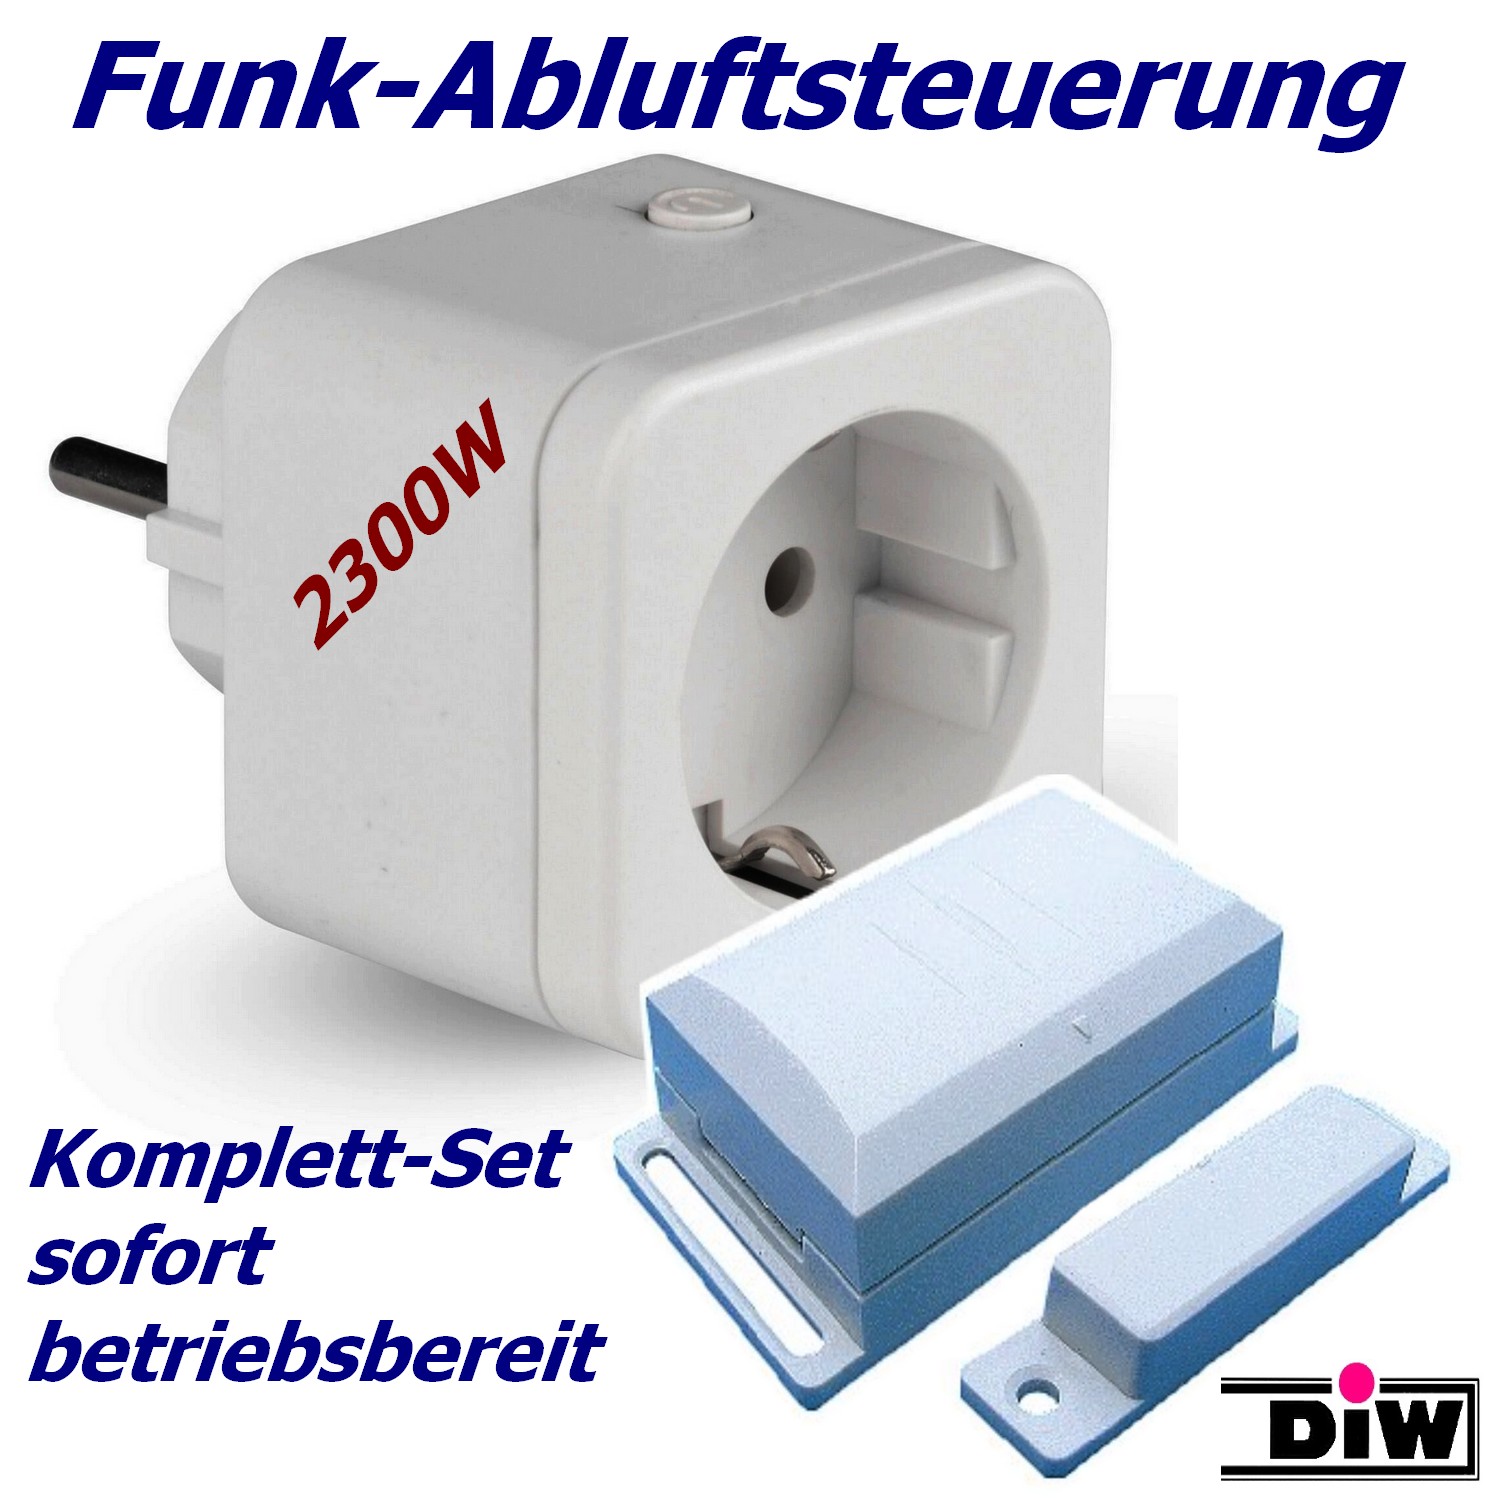 DFS-1000 Funk-Abluftsteuerung (c) www.Funk-Abluftsteuerung.de